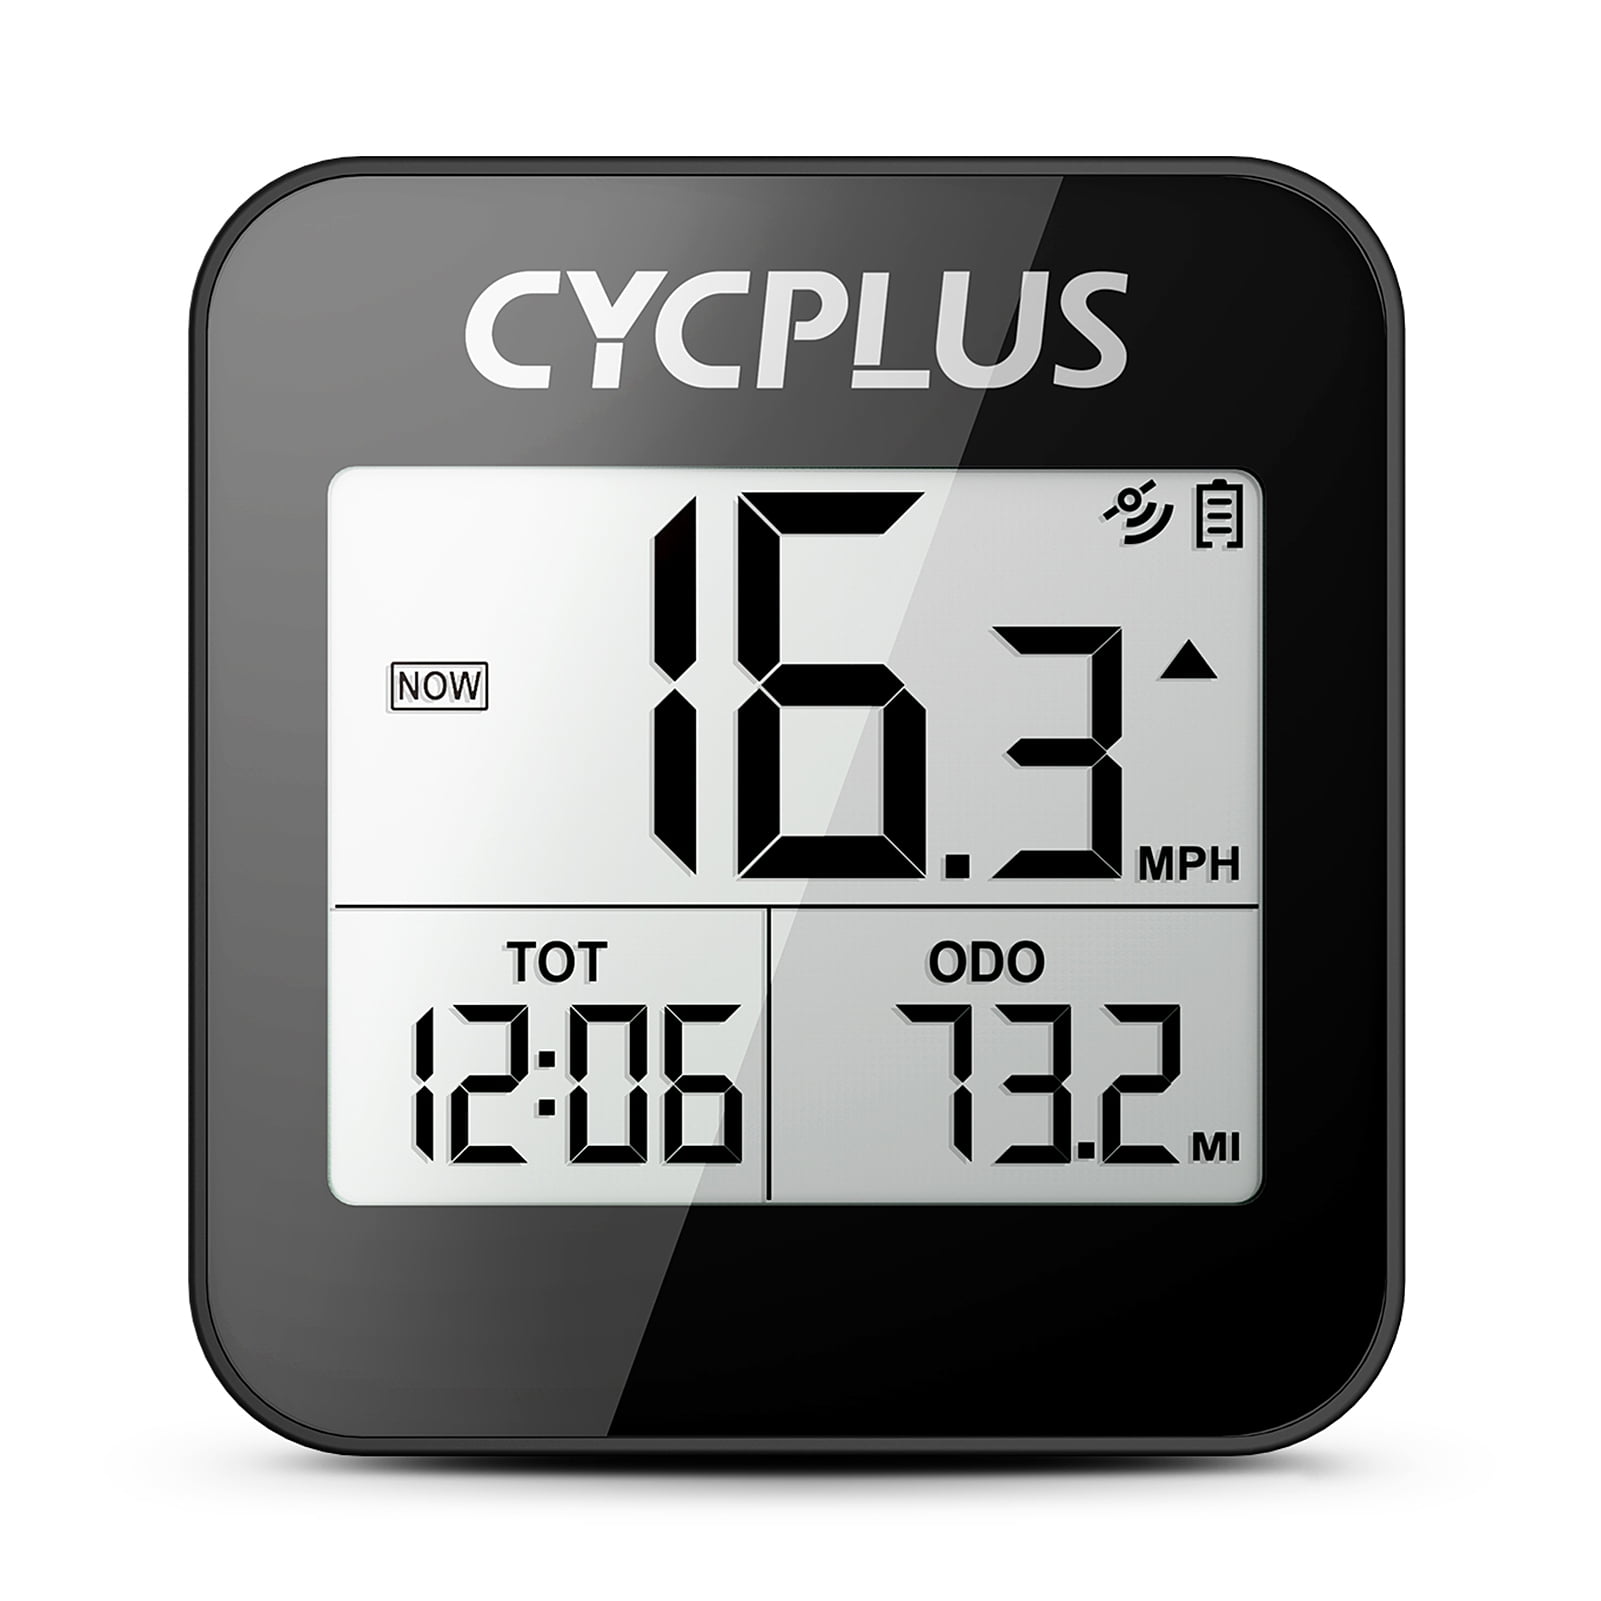 CYCPLUS M1 Bike Accessories GPS Bicycle Computer Cycling